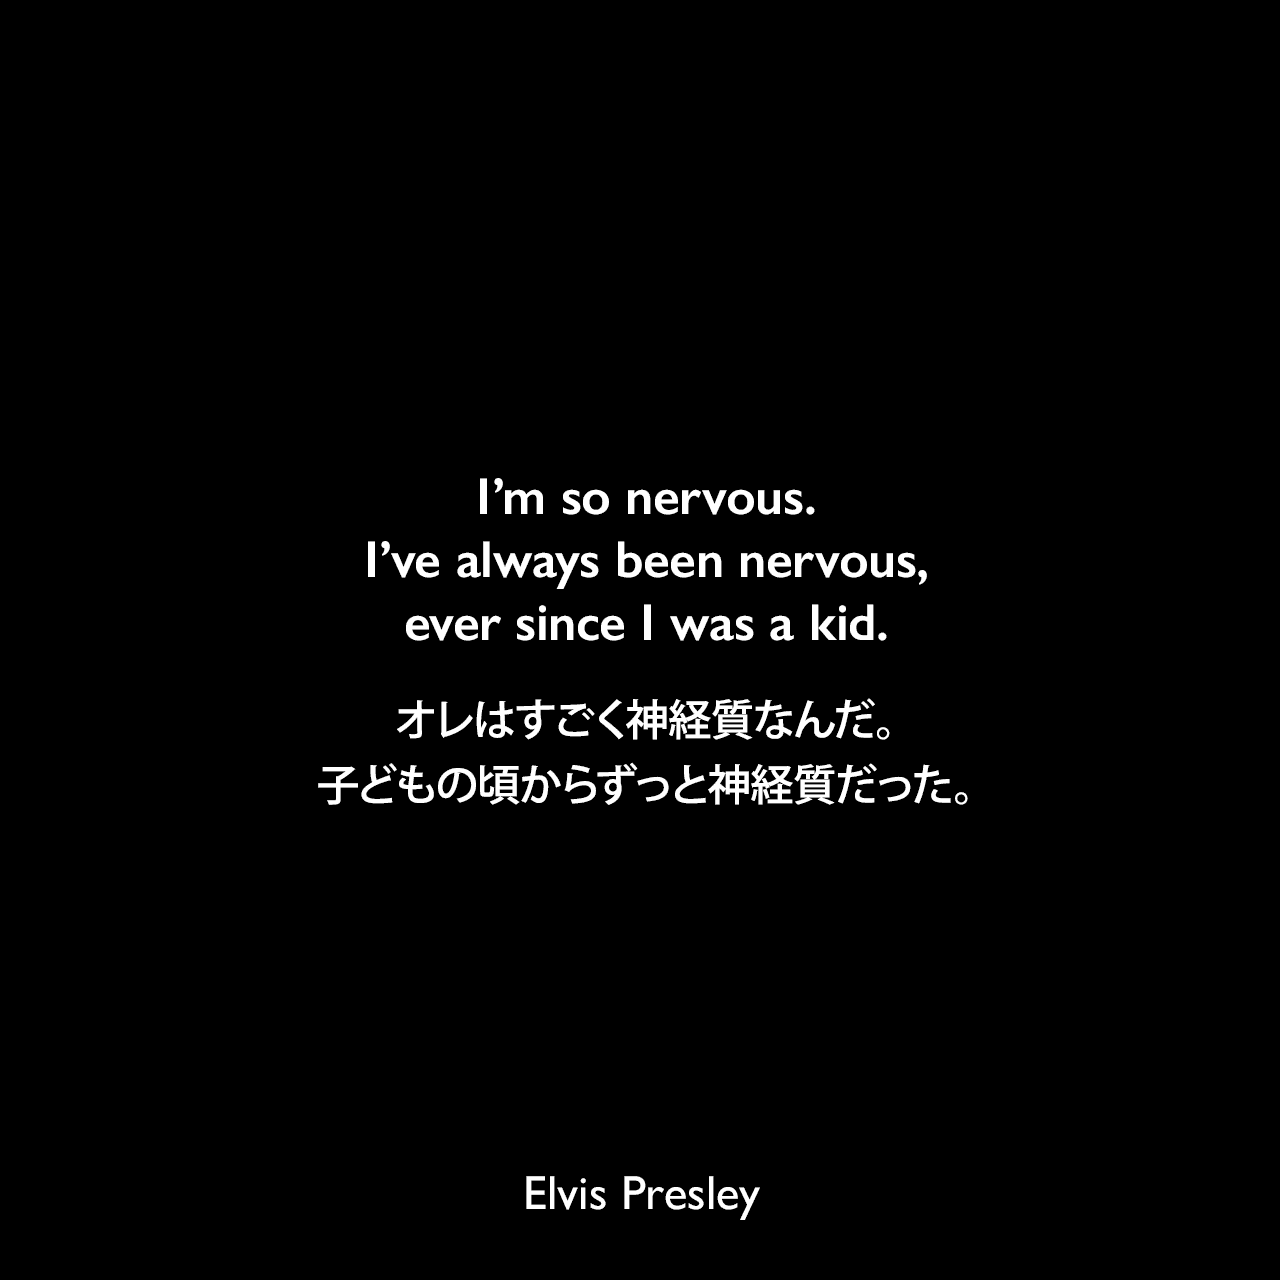 I’m so nervous. I’ve always been nervous, ever since I was a kid.オレはすごく神経質なんだ。子どもの頃からずっと神経質だった。Elvis Presley